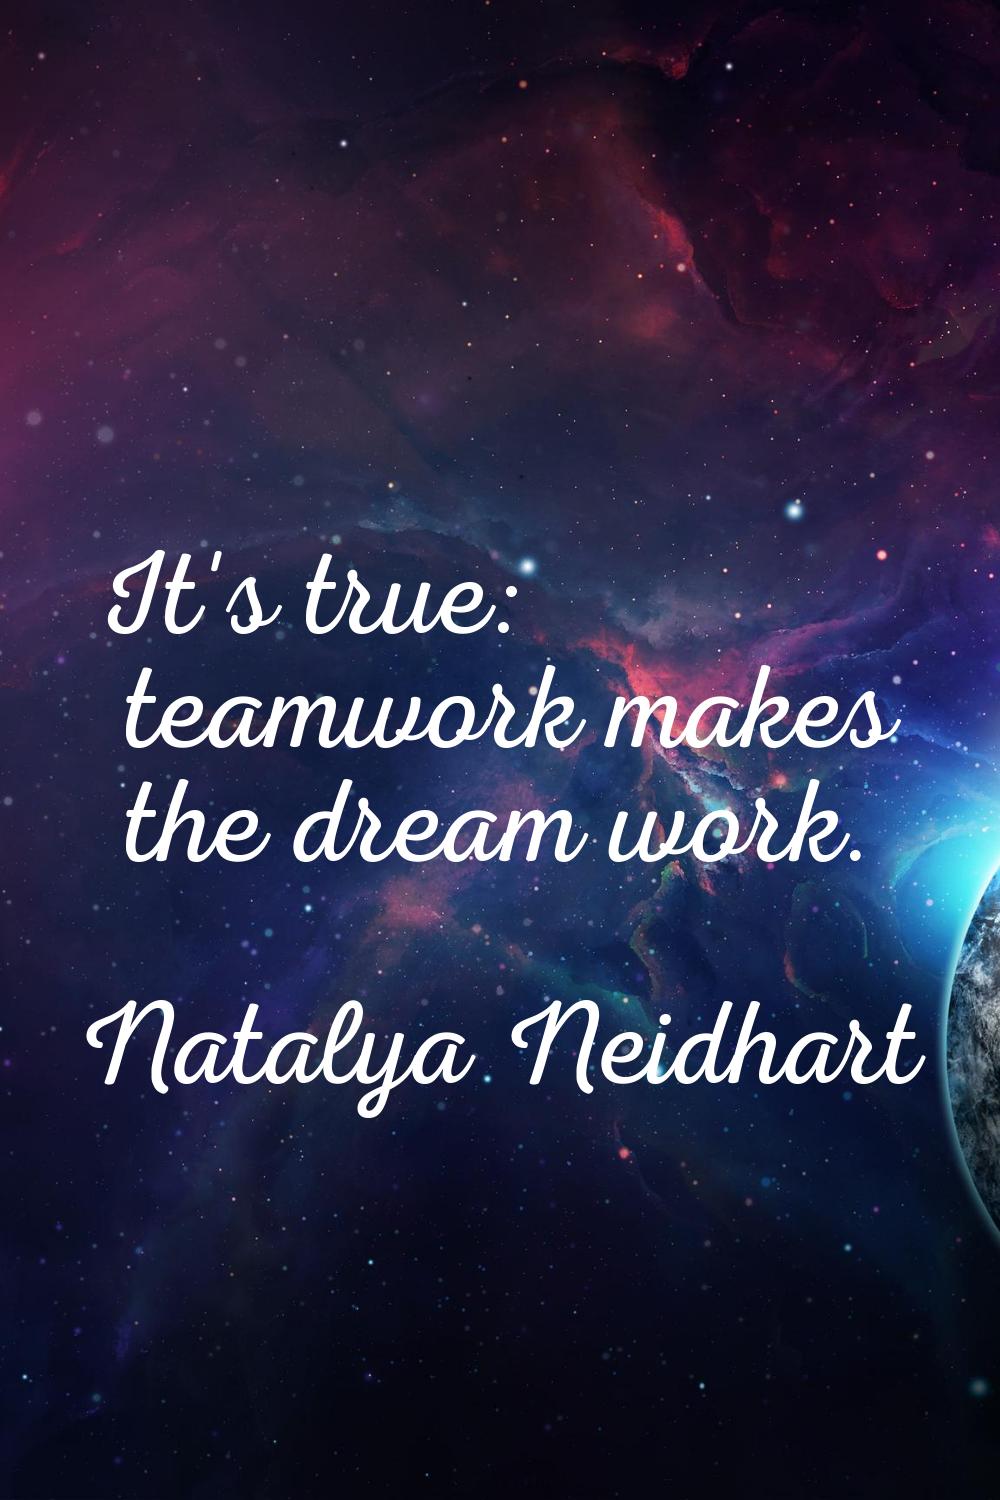 It's true: teamwork makes the dream work.